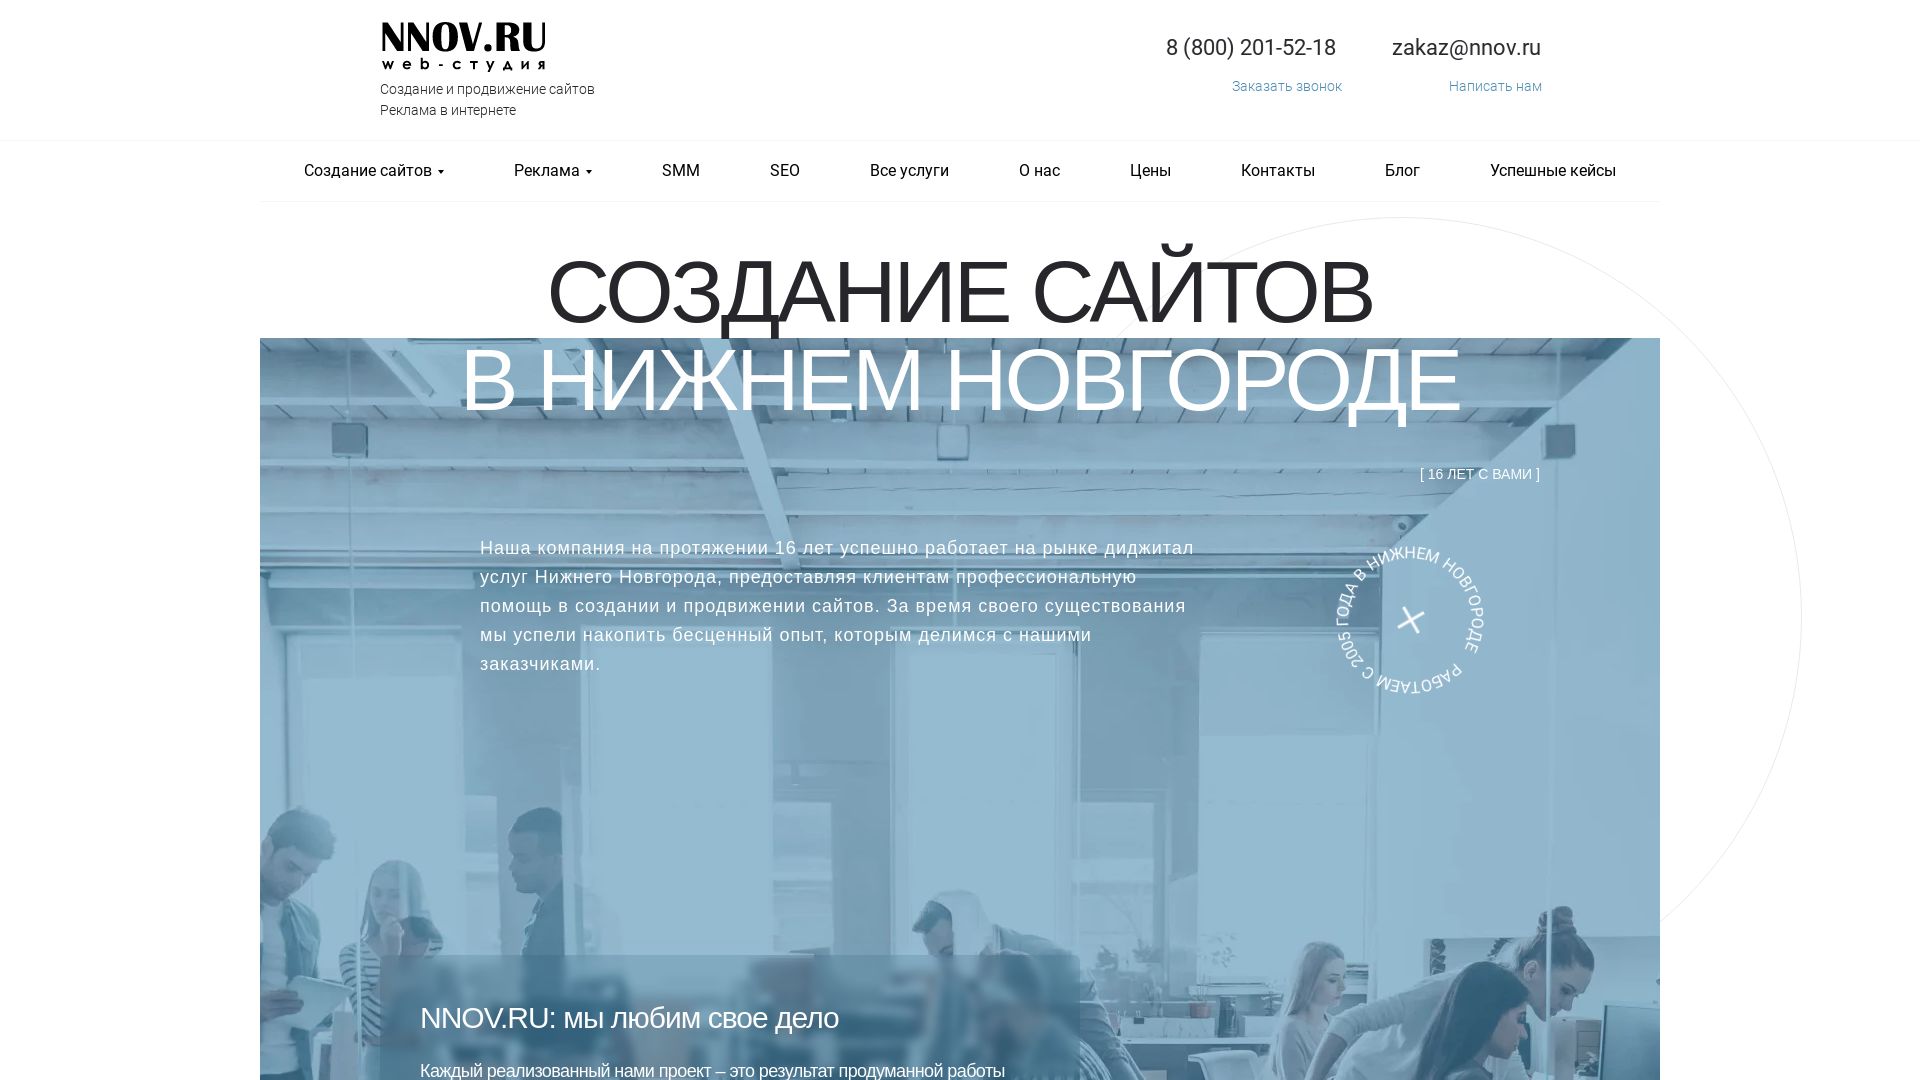 Статус сайта nnov.ru ОНЛАЙН